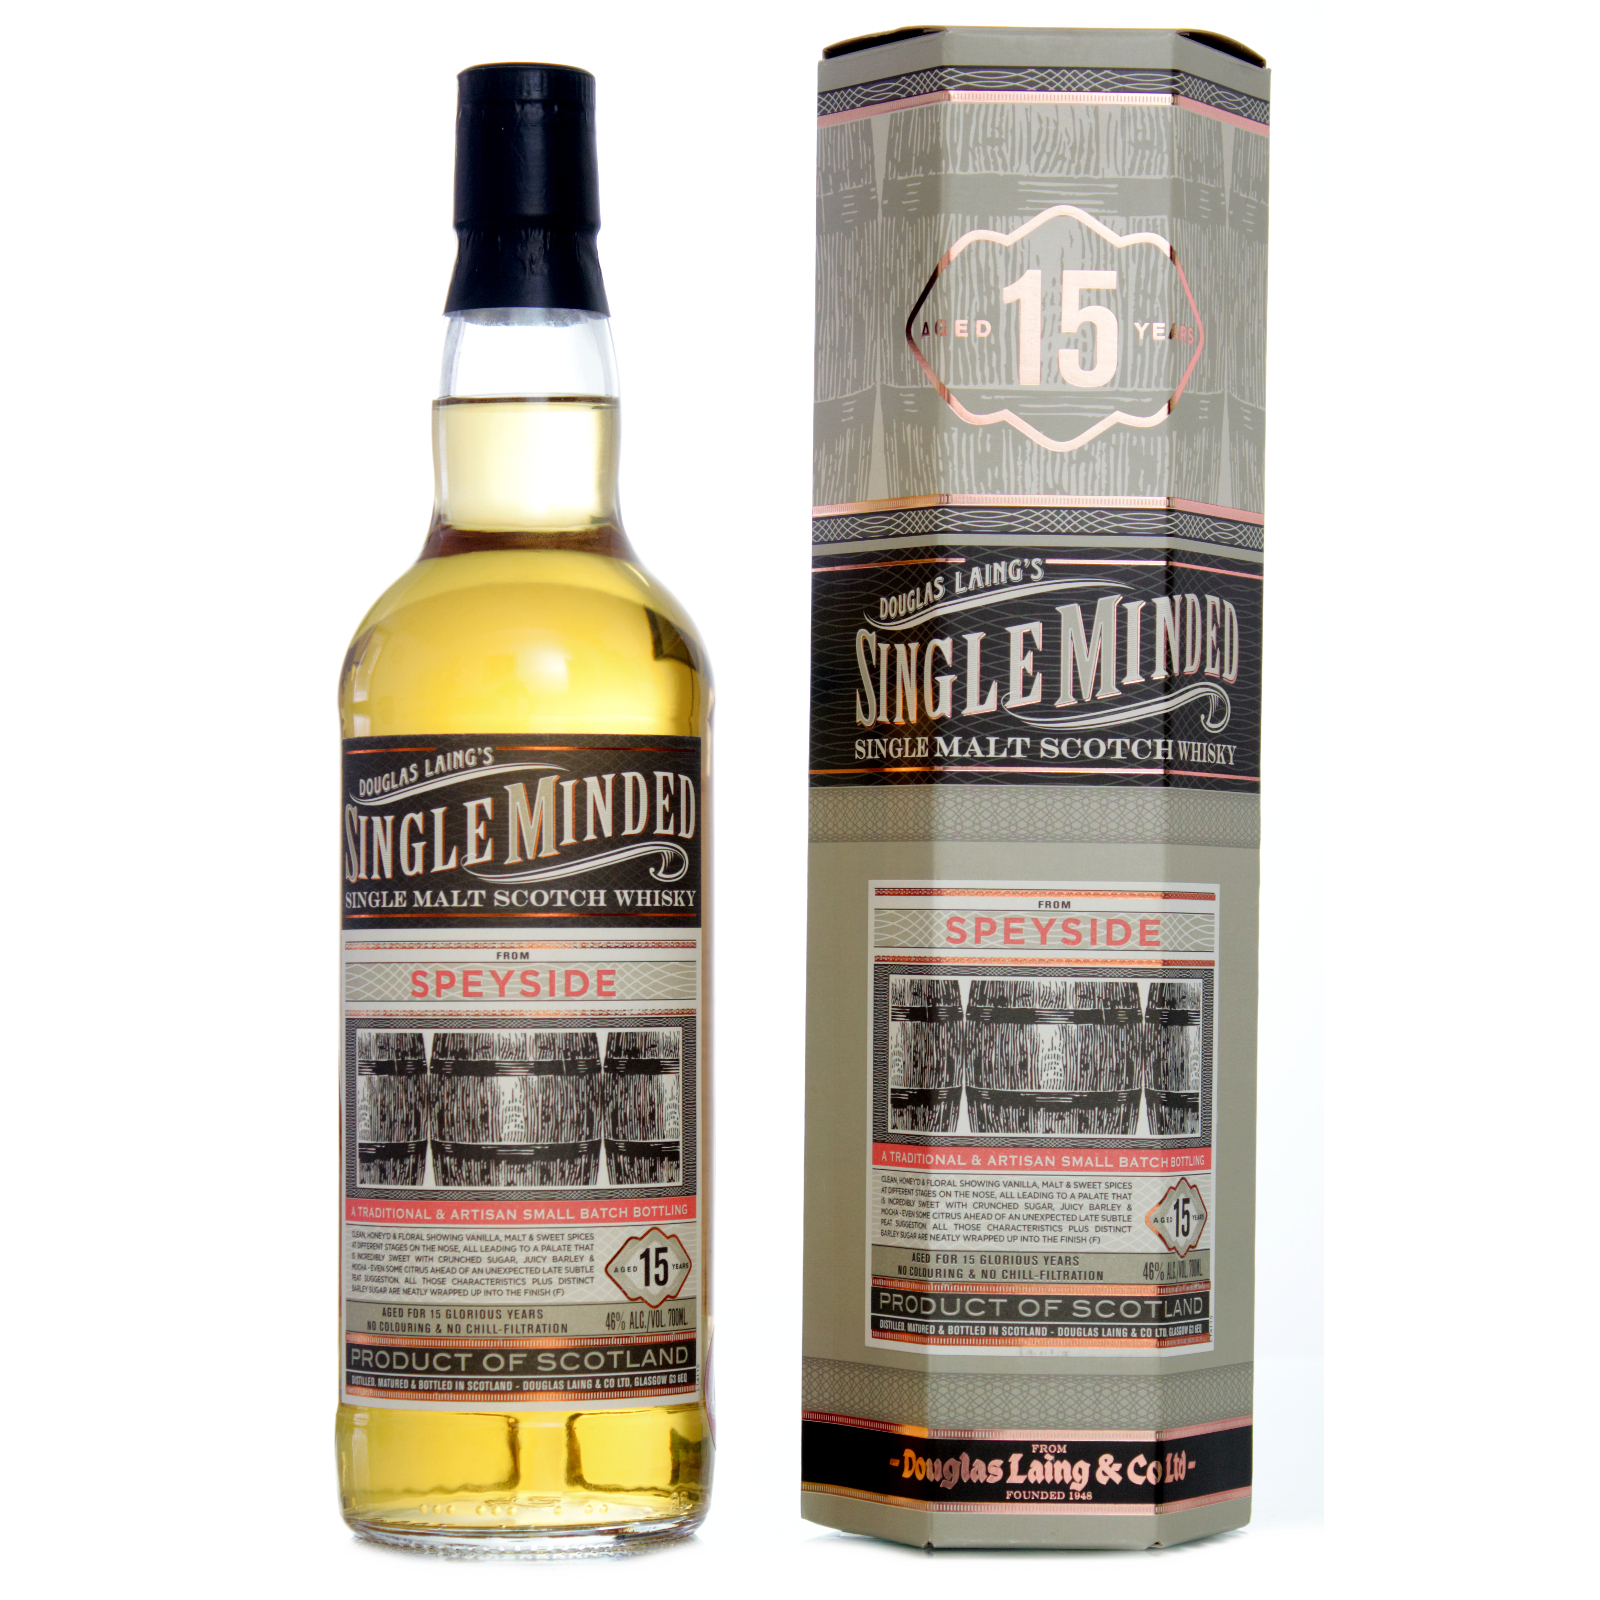 Single Minded Speyside 15 Years Single Cask Single Malt Whisky – Speyside, Scotland